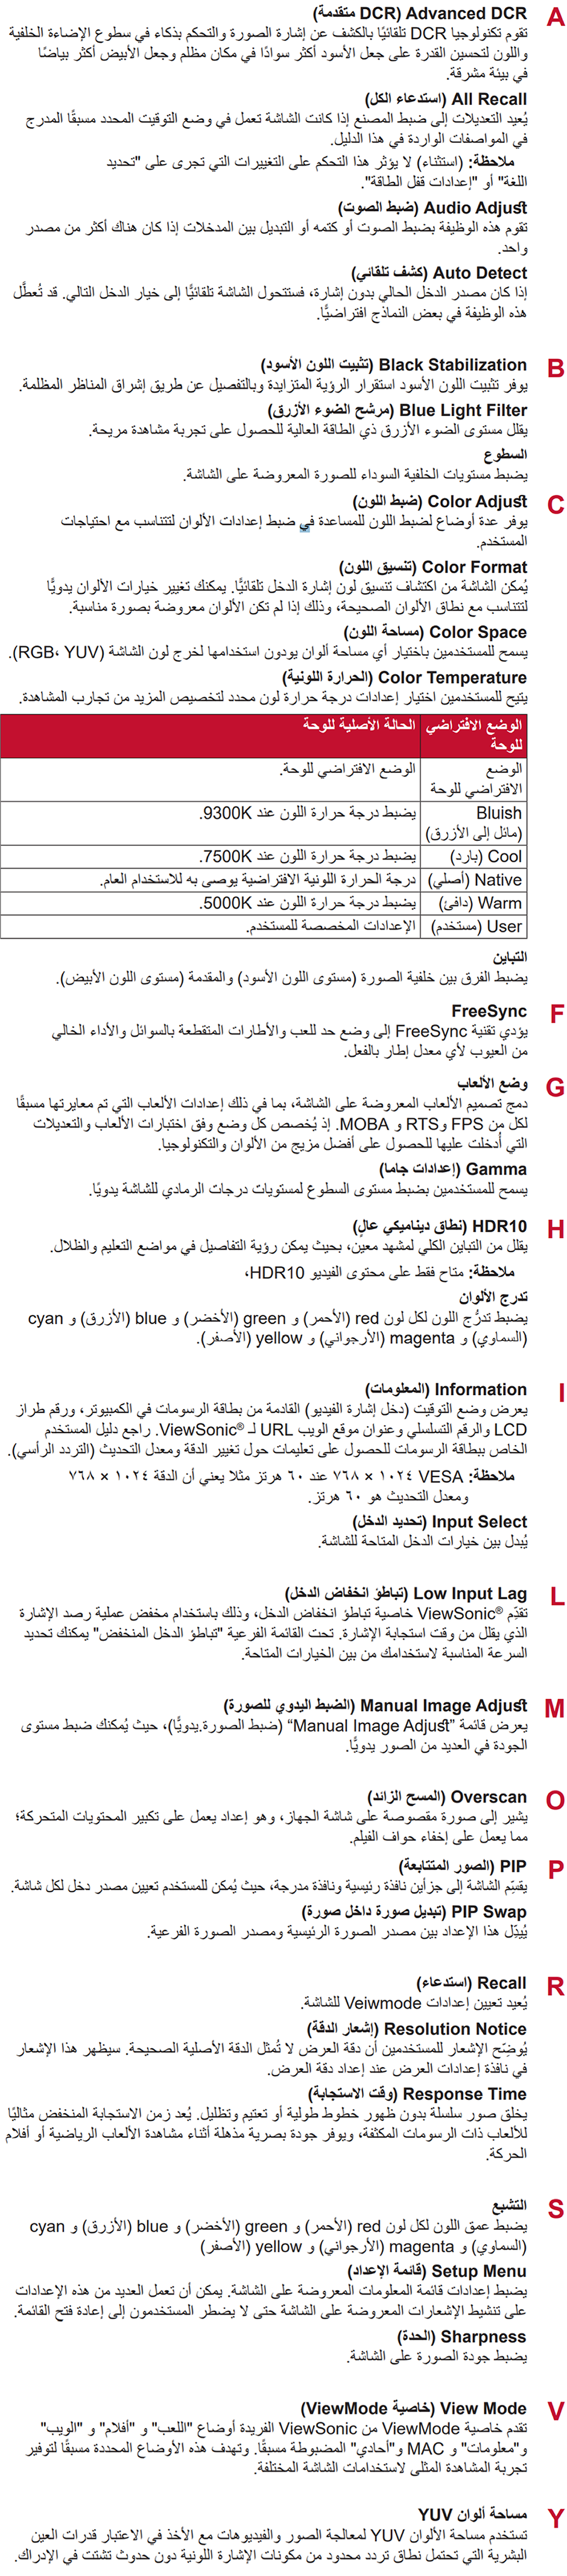 File:Glossary Monitor Arabic.png